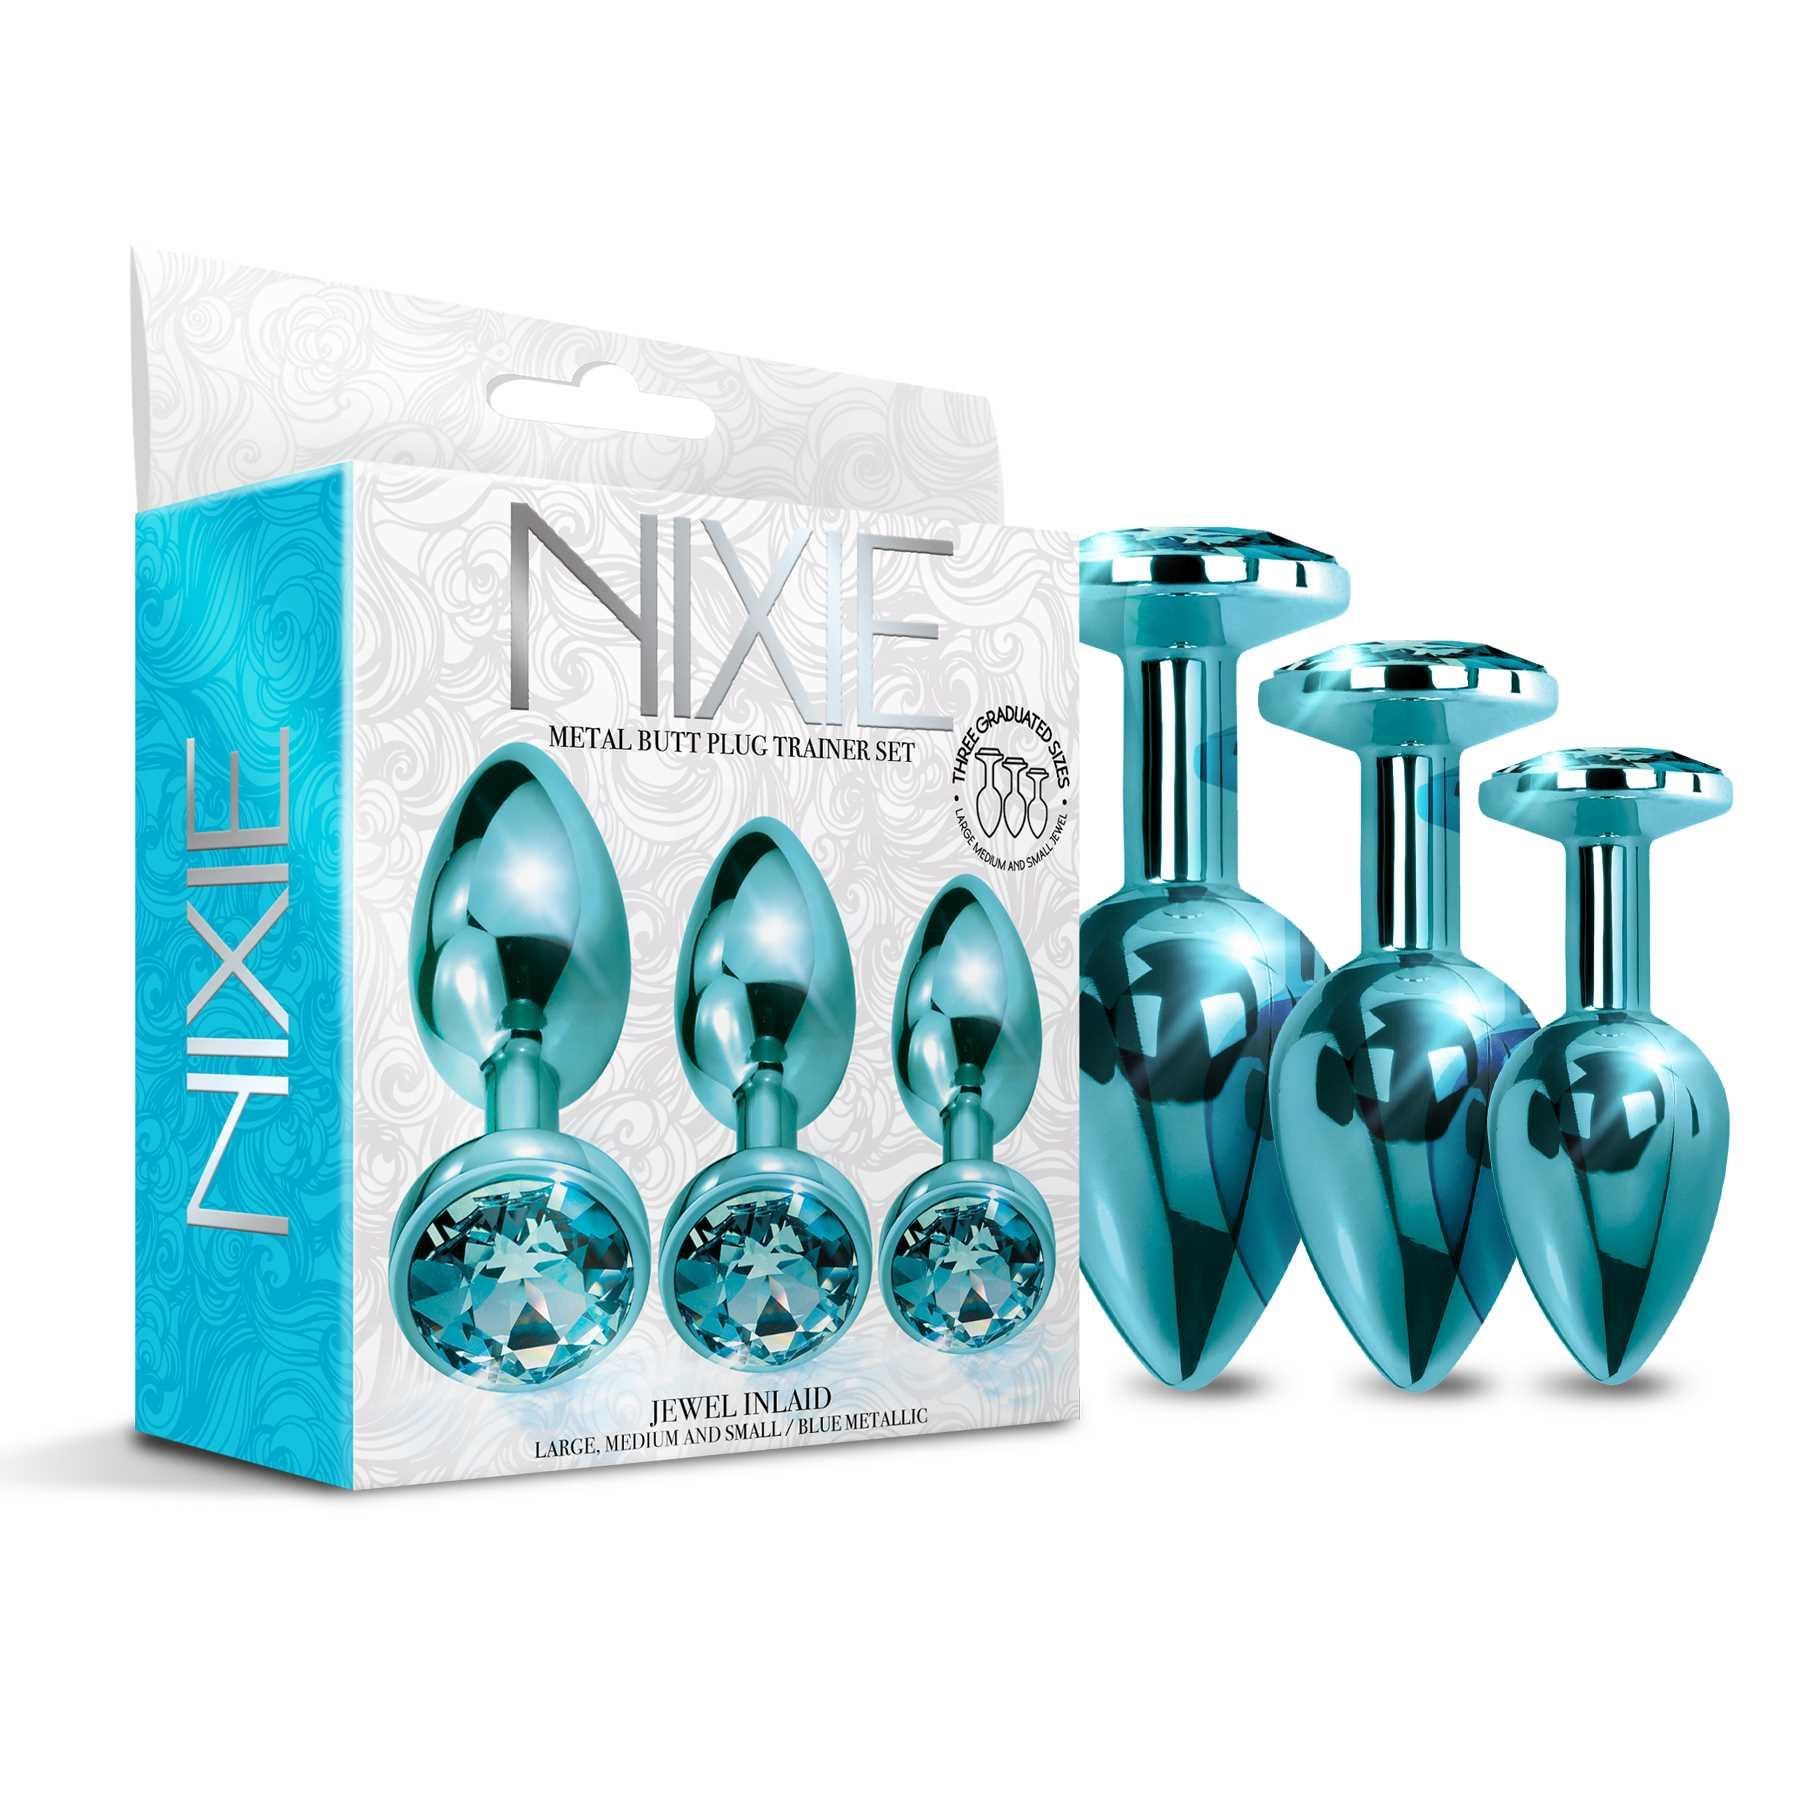 NIXIE Metal Butt Plug Trainer Set Metallic blue boxed set